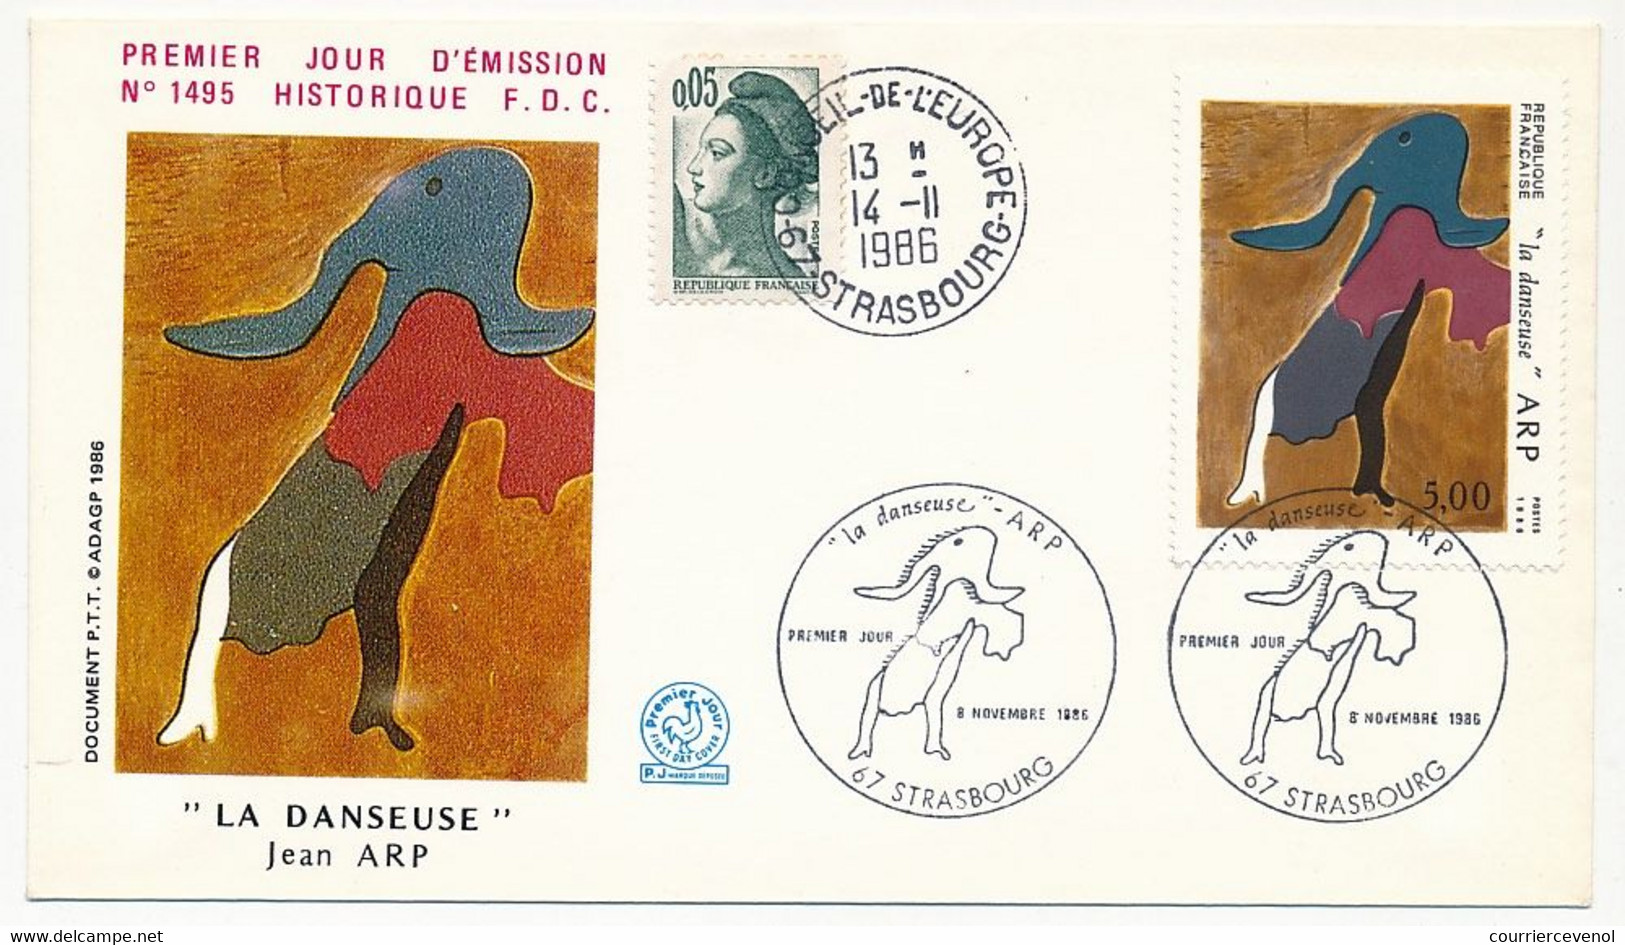 FRANCE => Enveloppe FDC - 5,00 La Danseuse ARP - 8 Novembre 1986 - Strasbourg + Conseil De L'Europe - 1980-1989